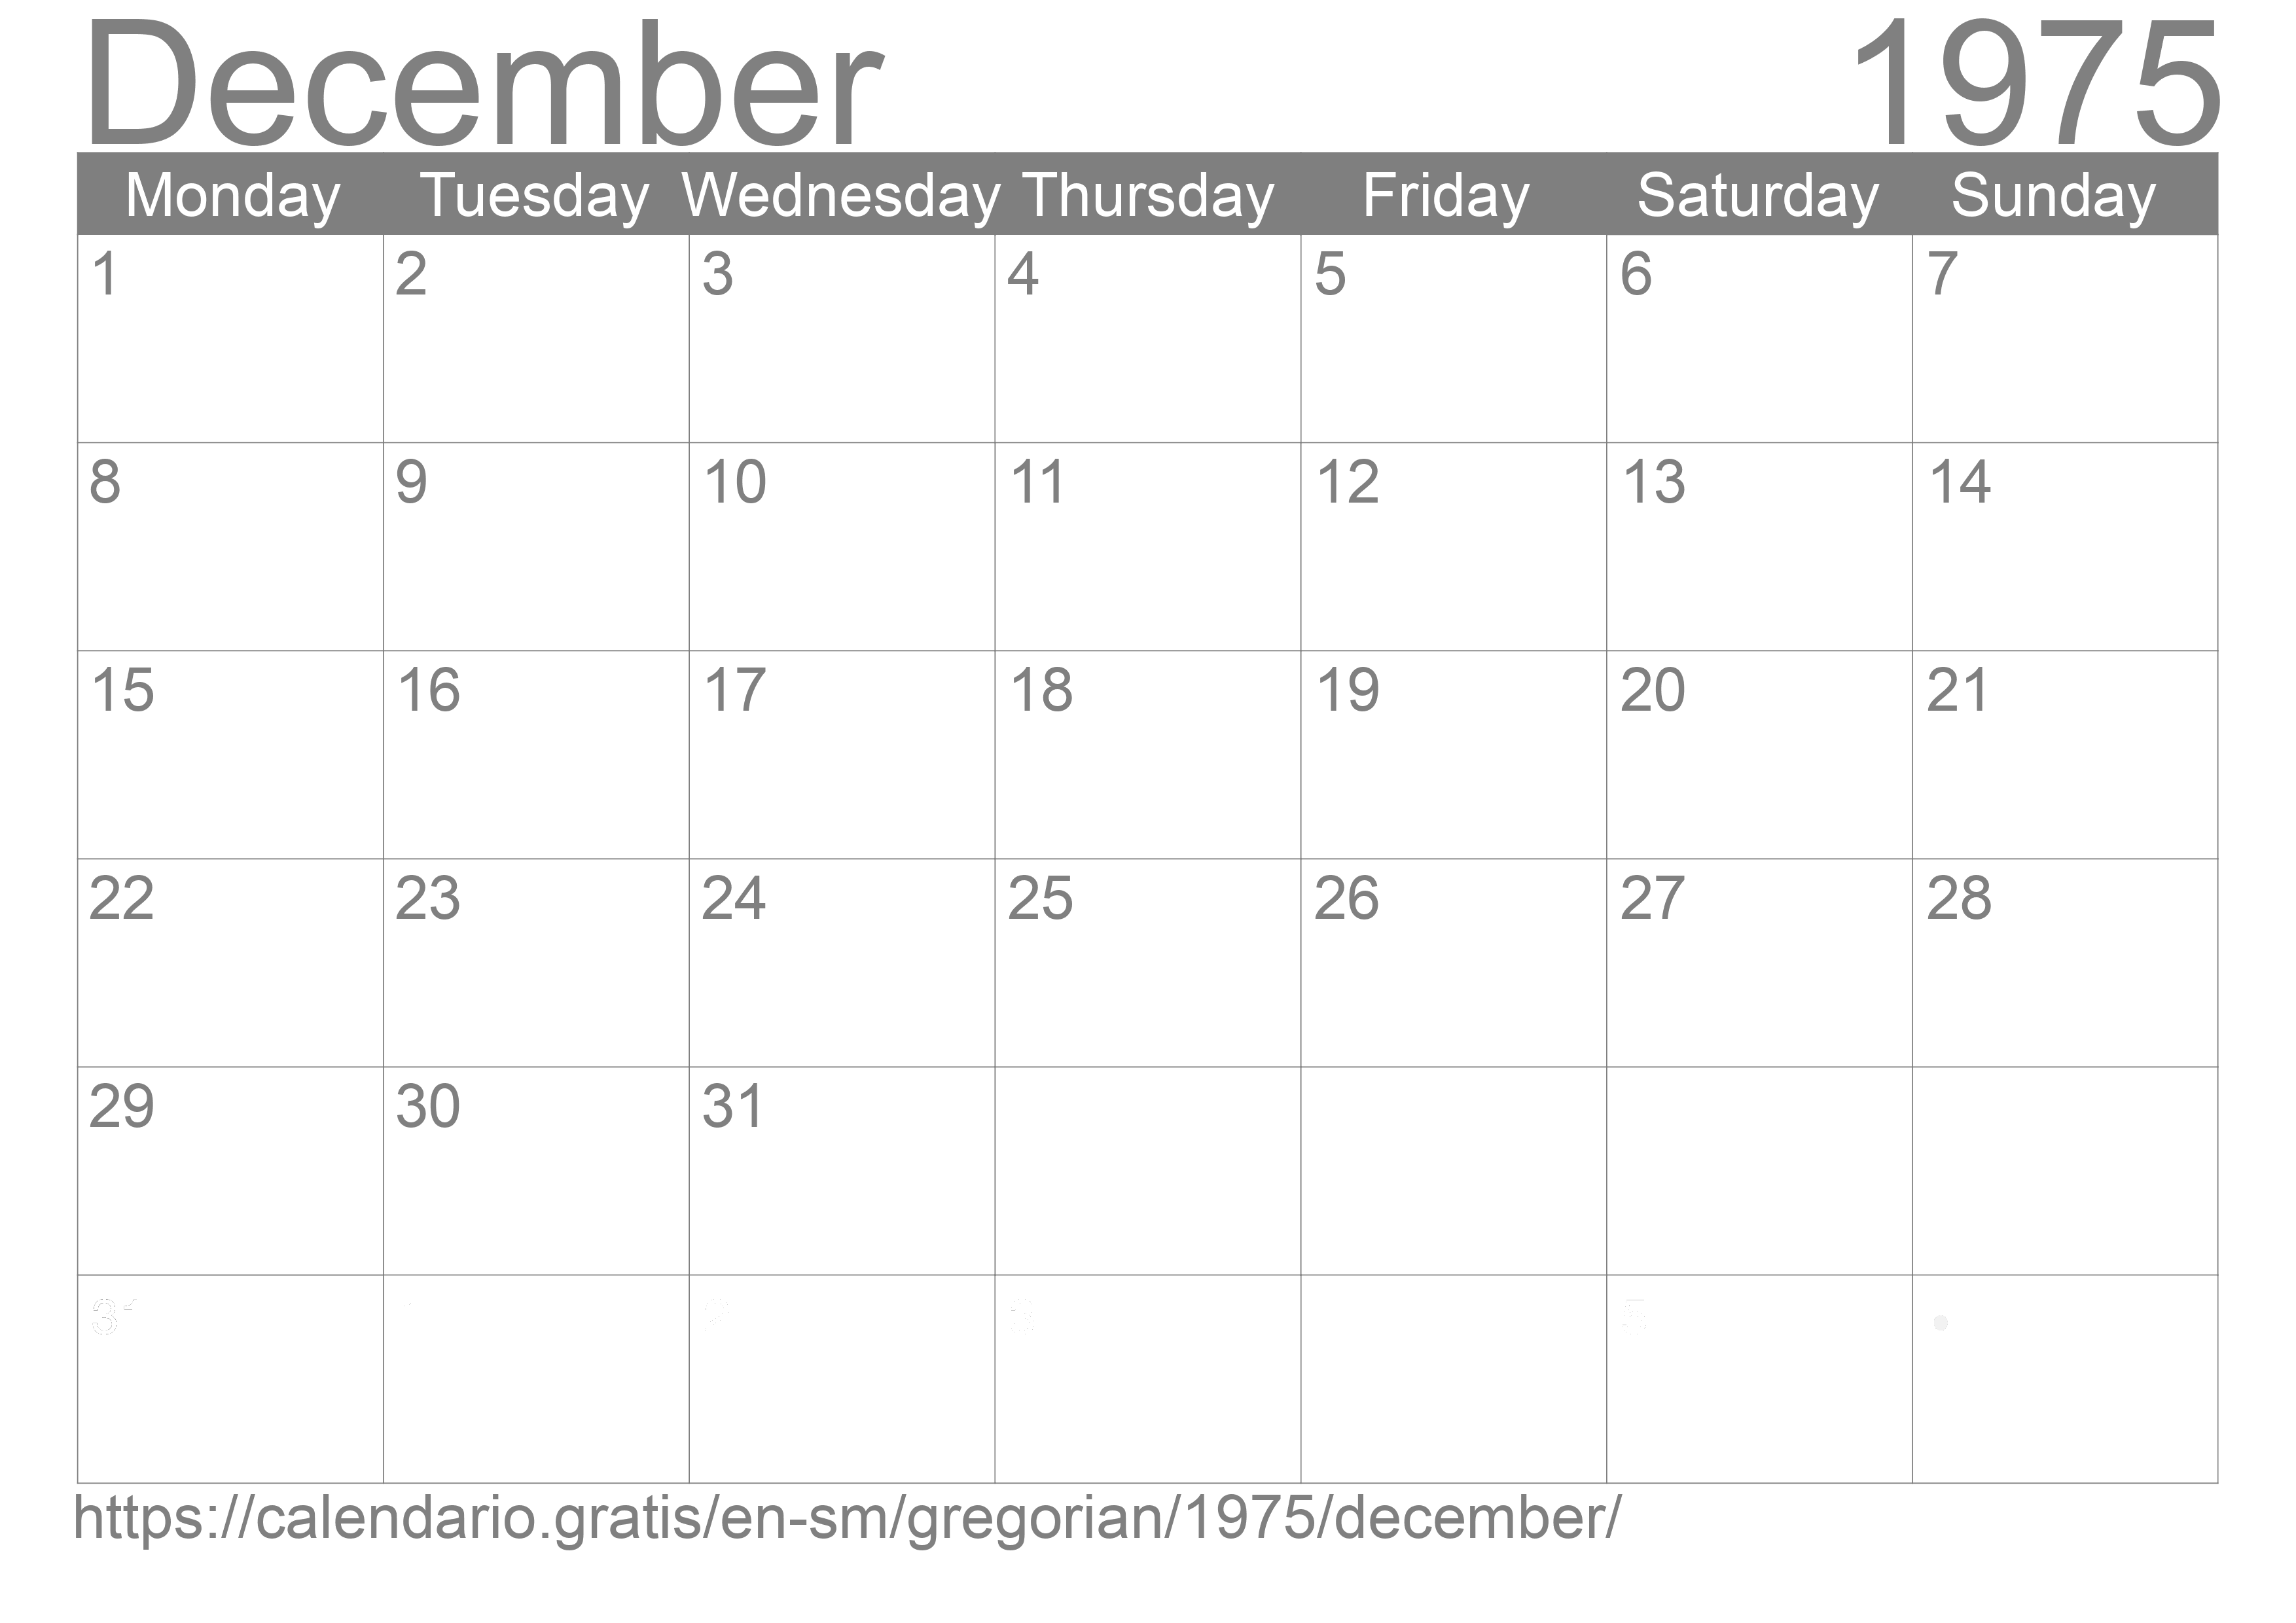 Calendar December 1975 to print